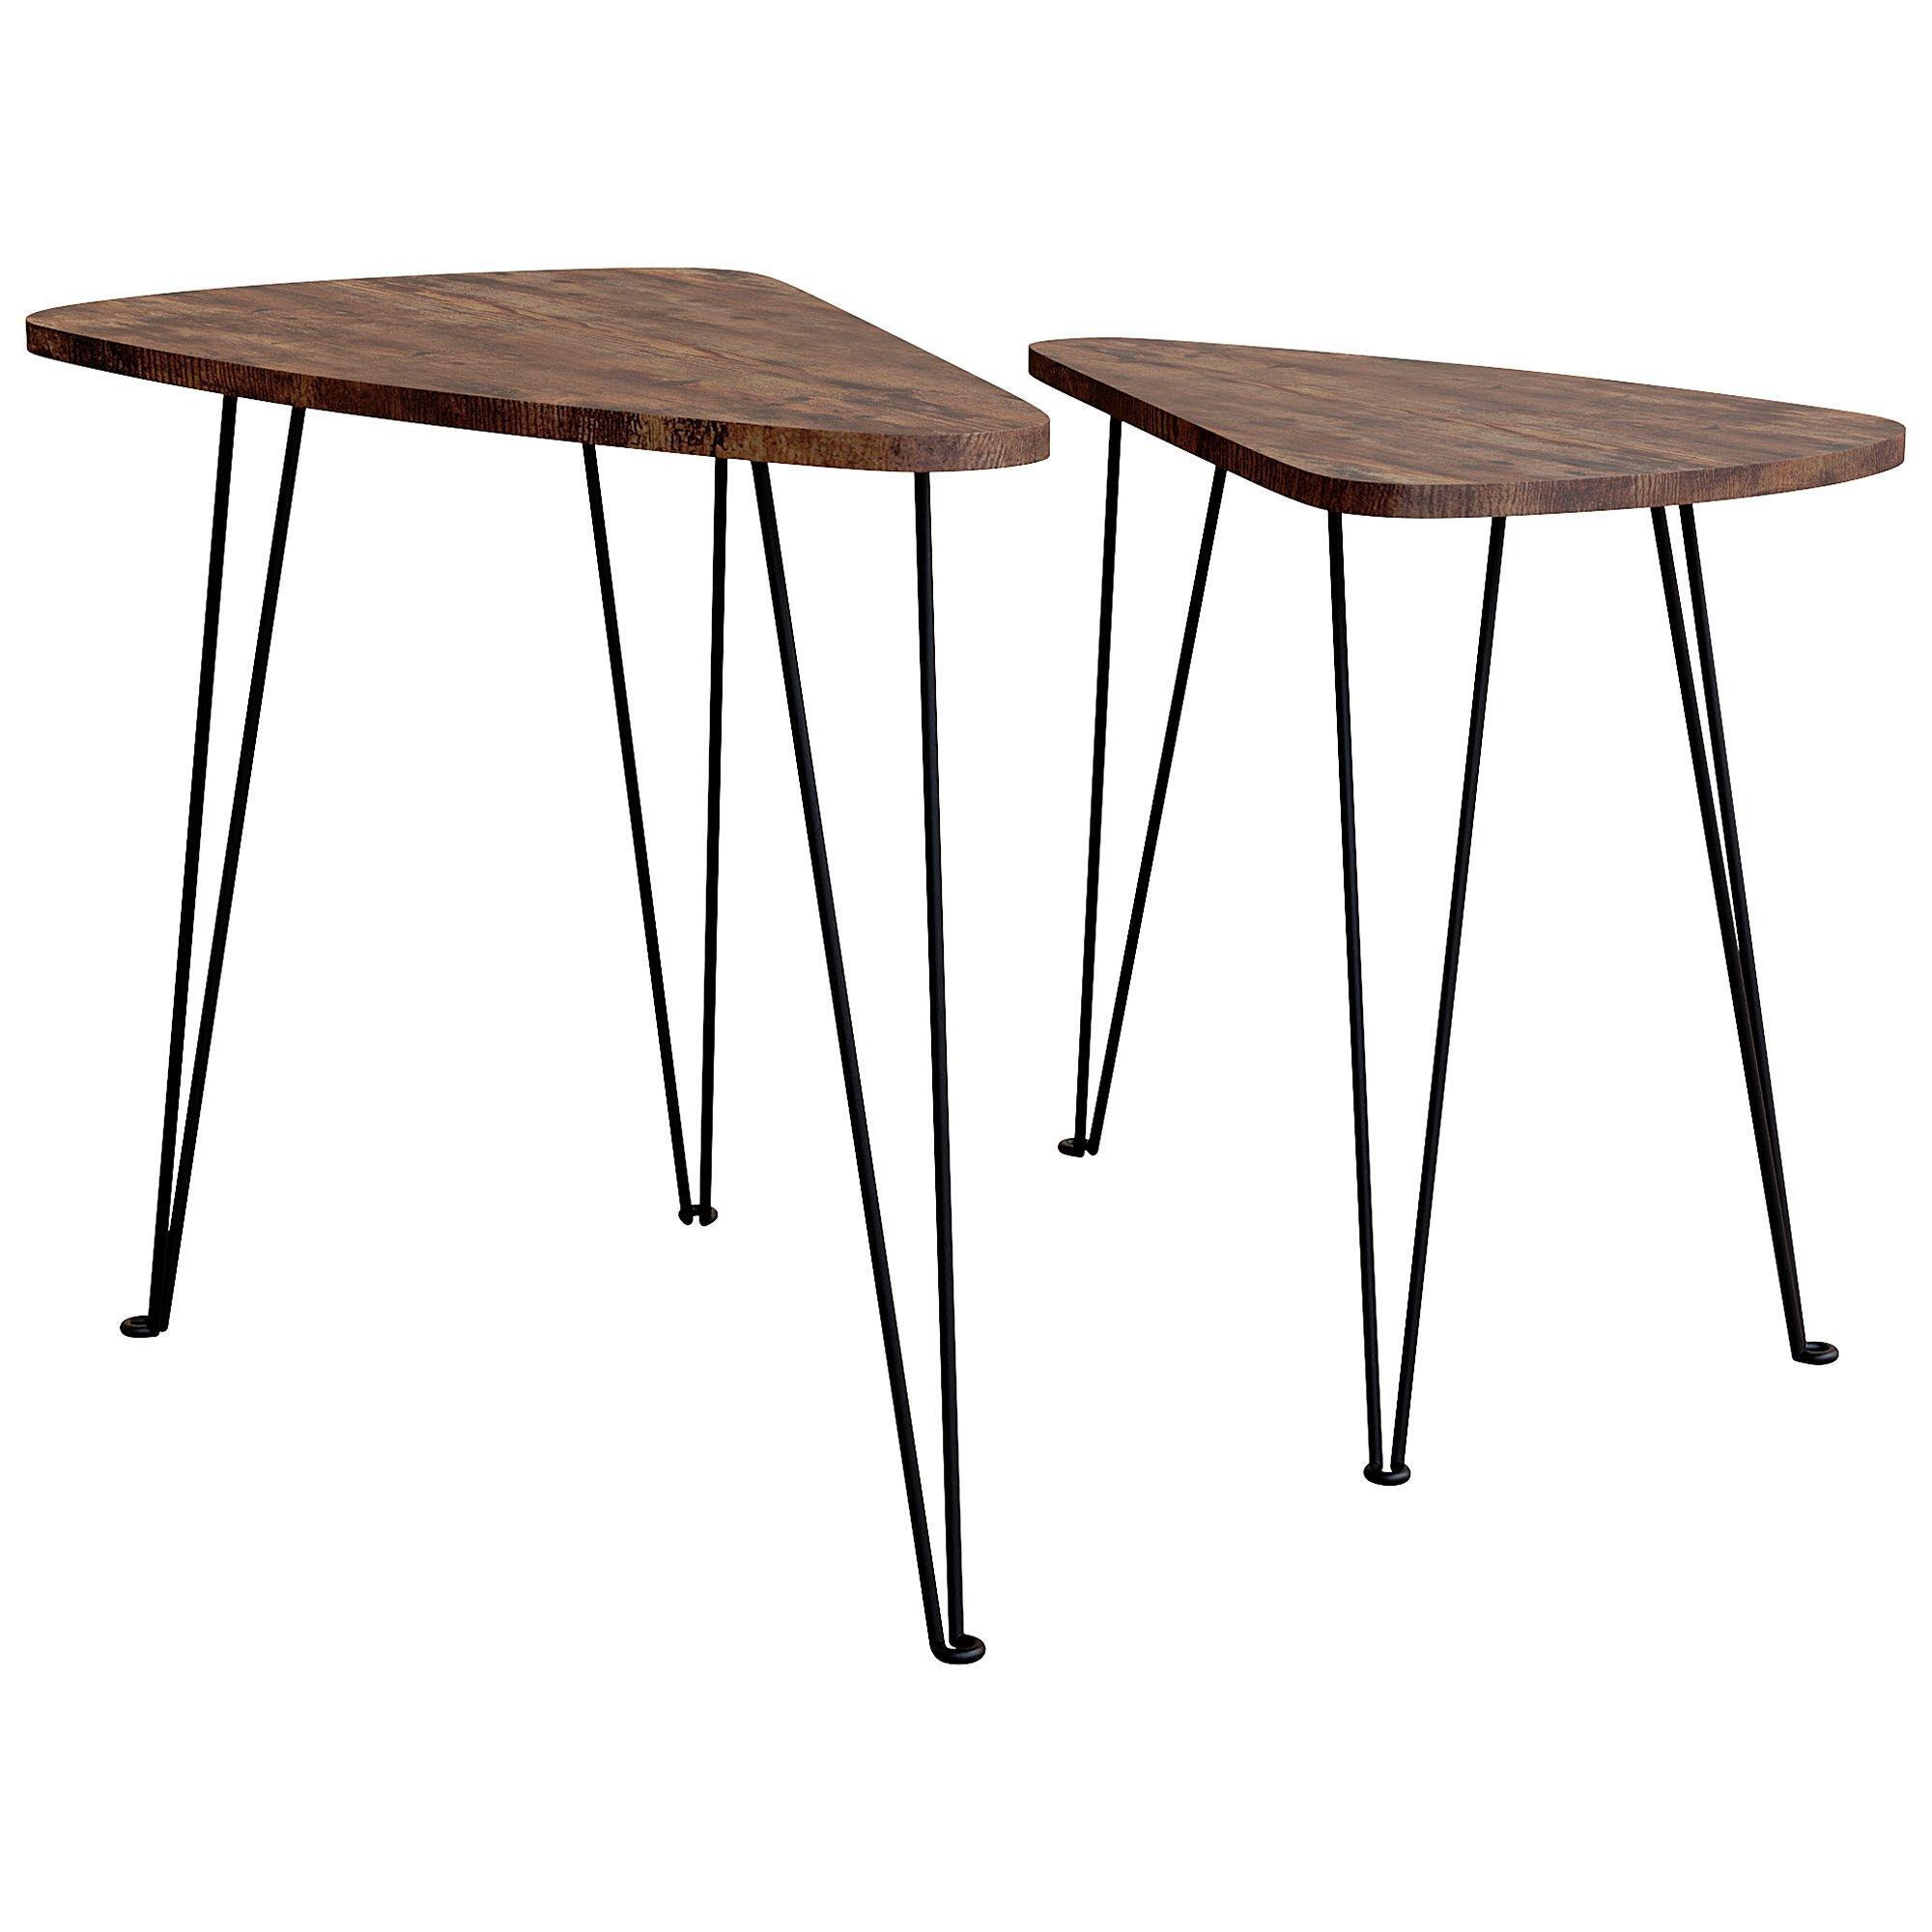 Vida Designs Brooklyn Nest of 2 Oval Tables Set Of 2 MDF Living Room Coffee Side Table Furniture - image 1